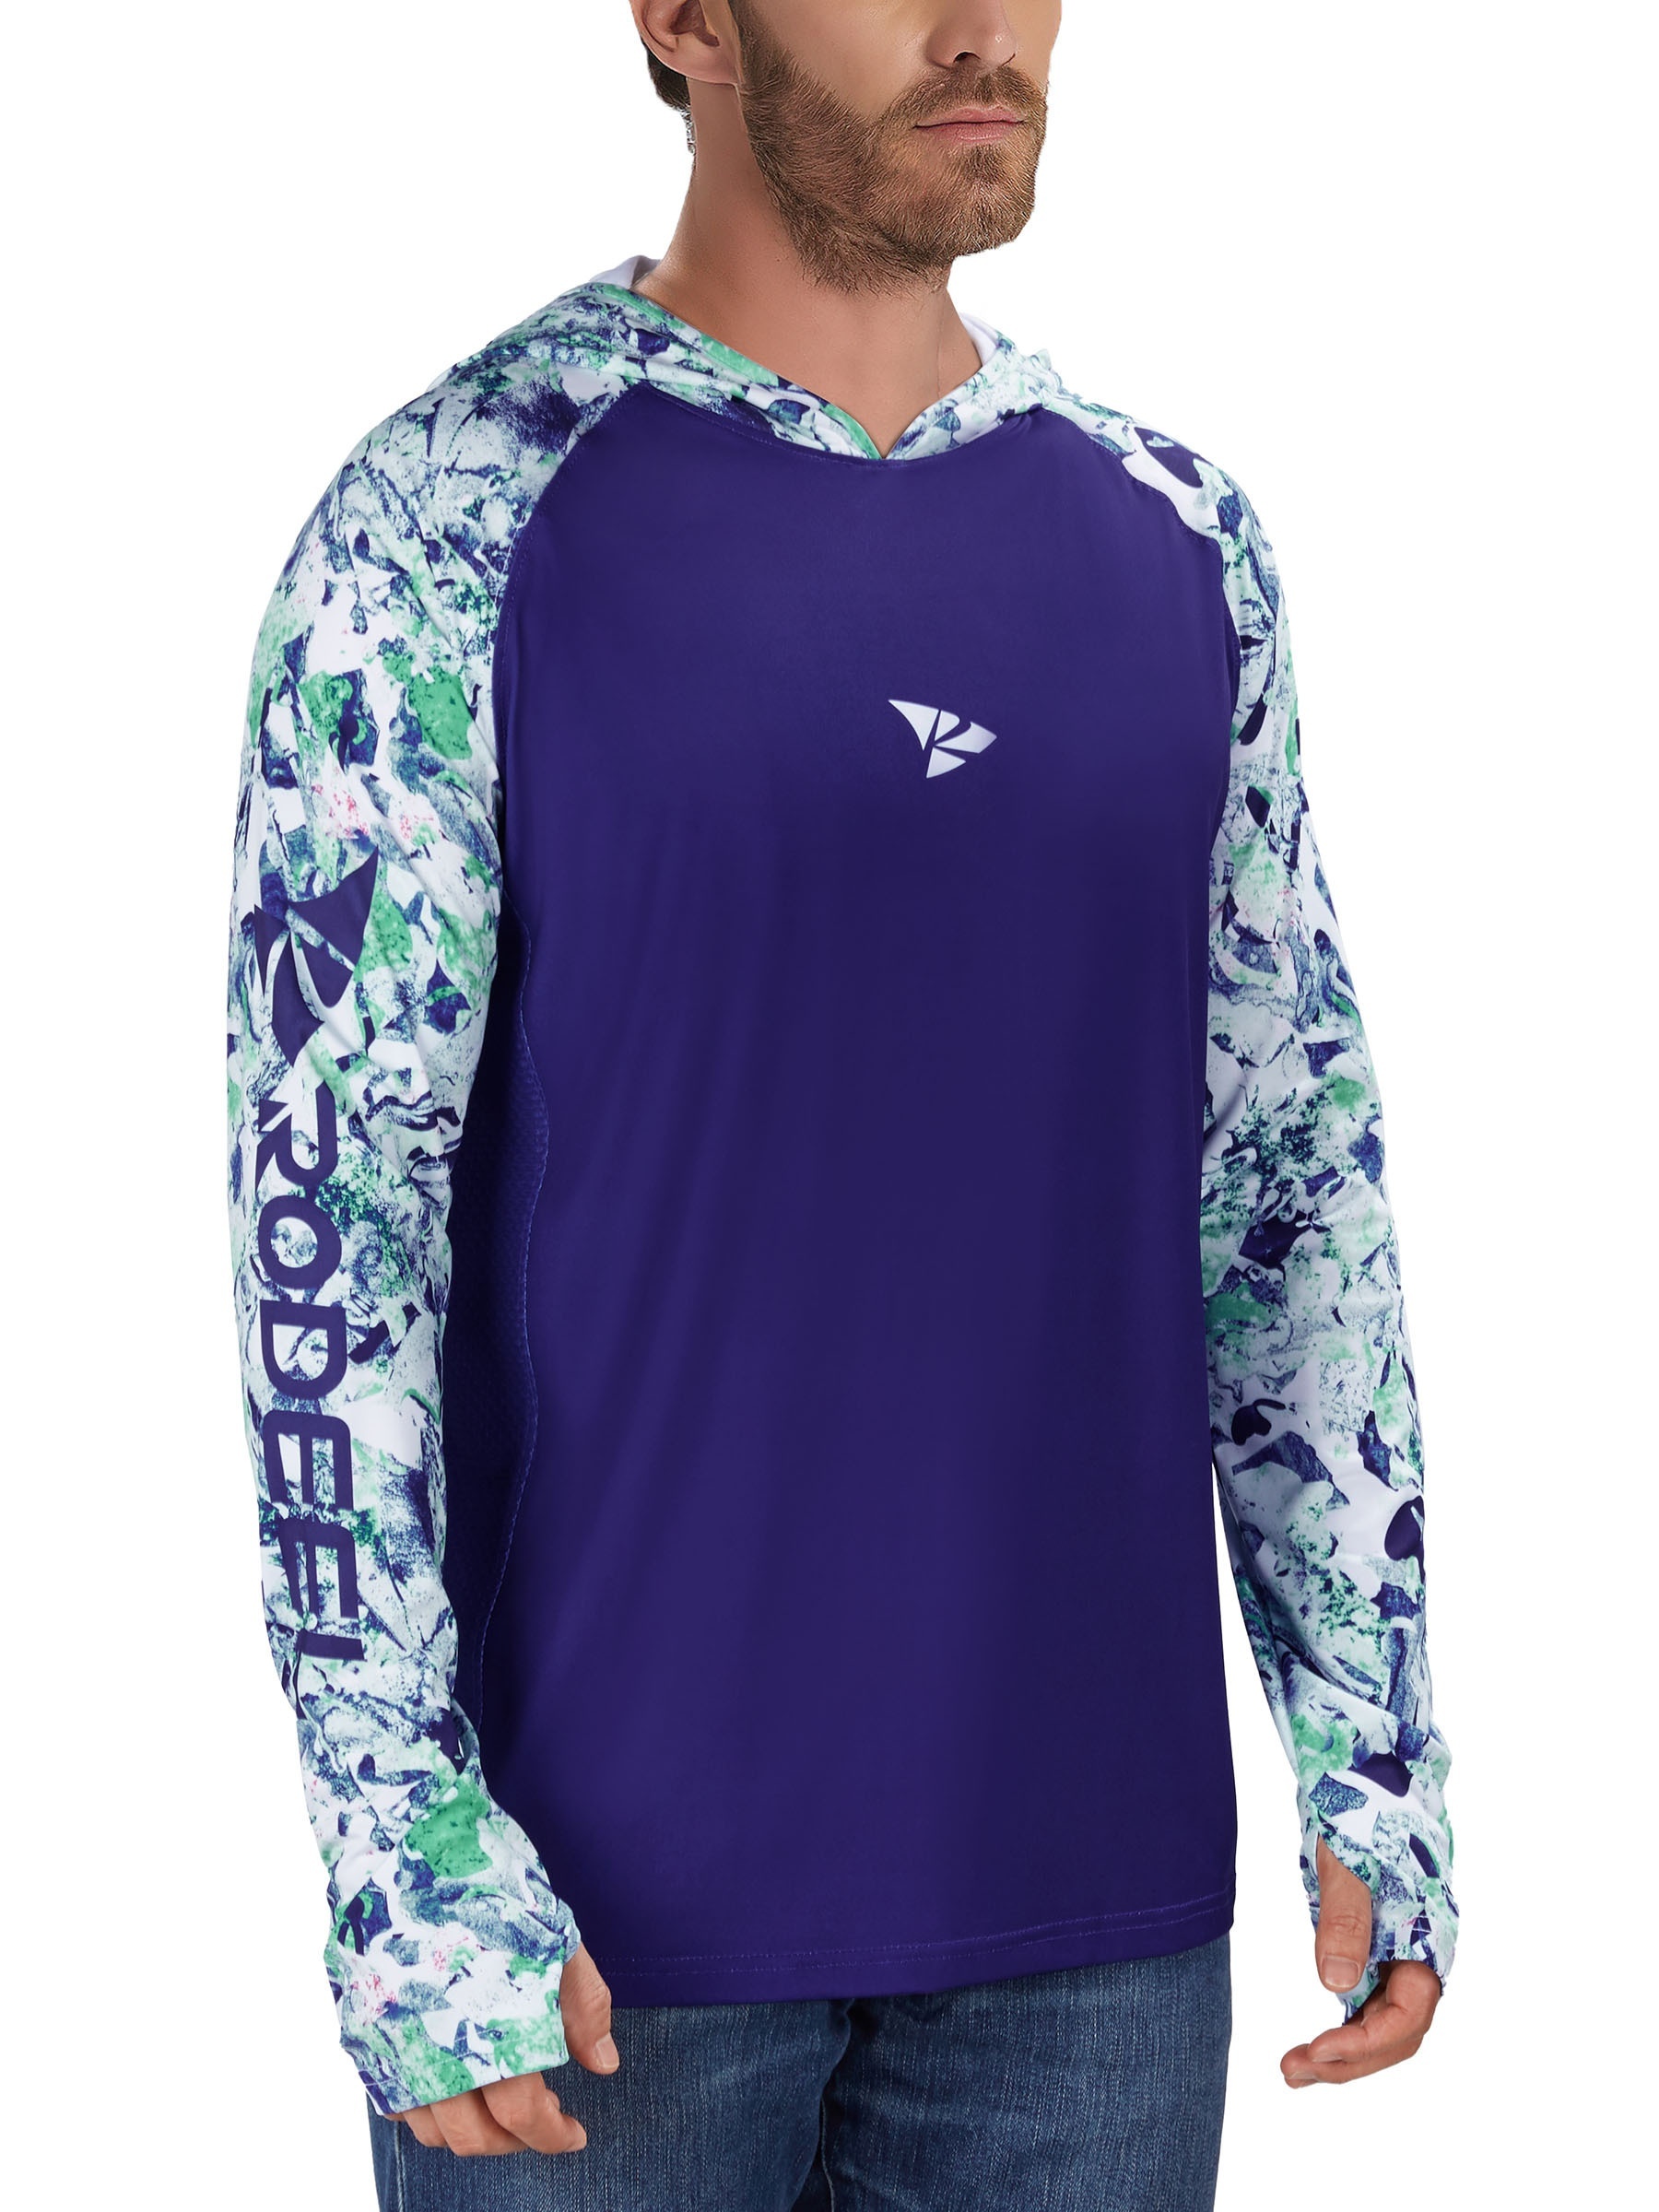 Fishing Shirts HUK Long Sleeve Performance Fishing Apparel Men Summer Soft  Breathable Tops Outdoor Sports UPF 50+ Fishing Wear